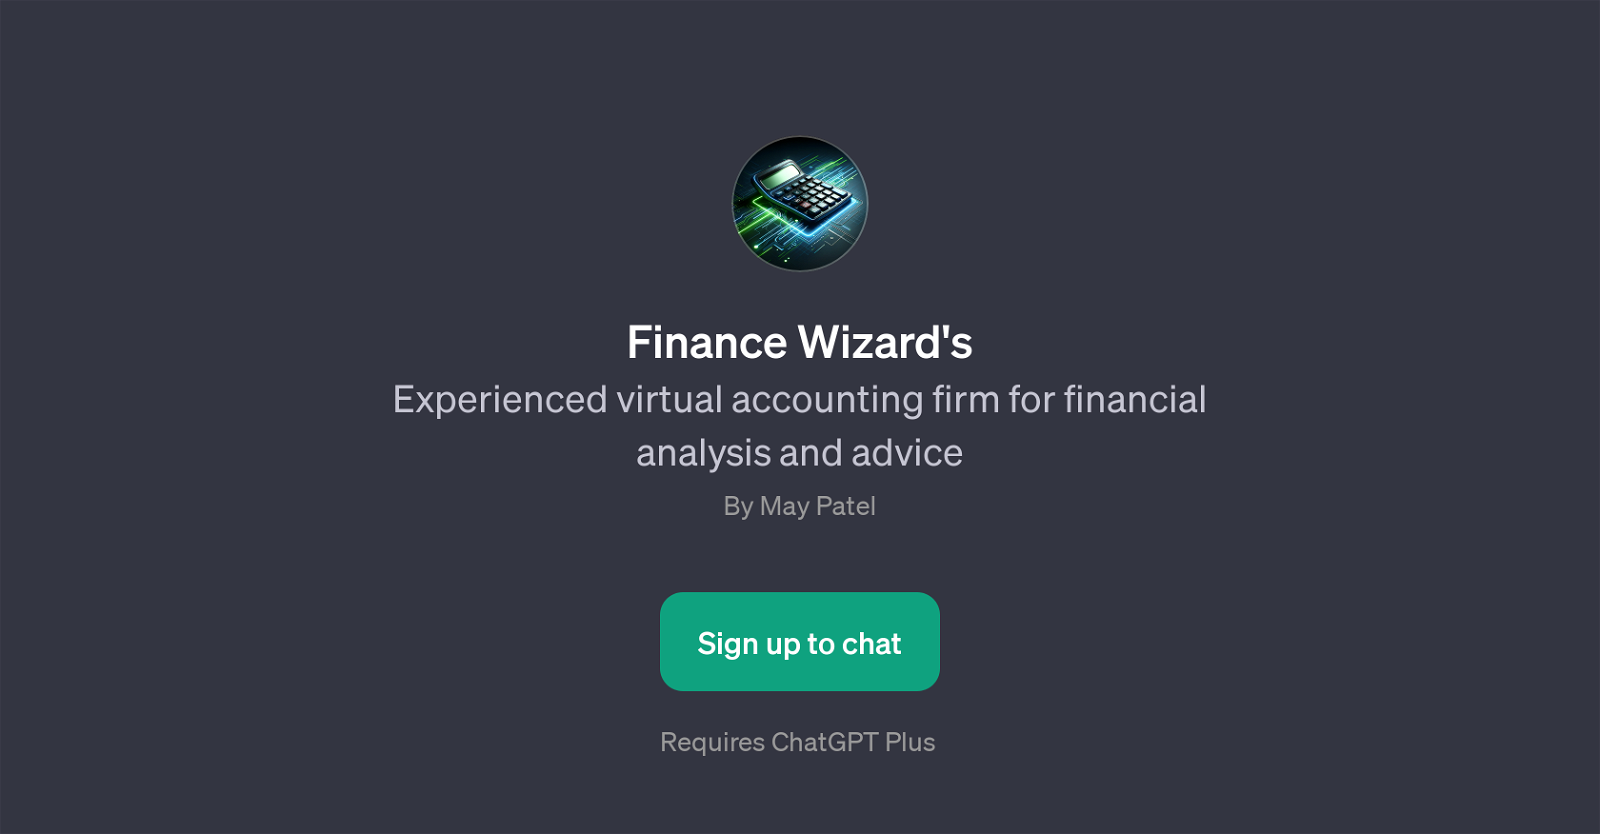 Finance Wizard's website